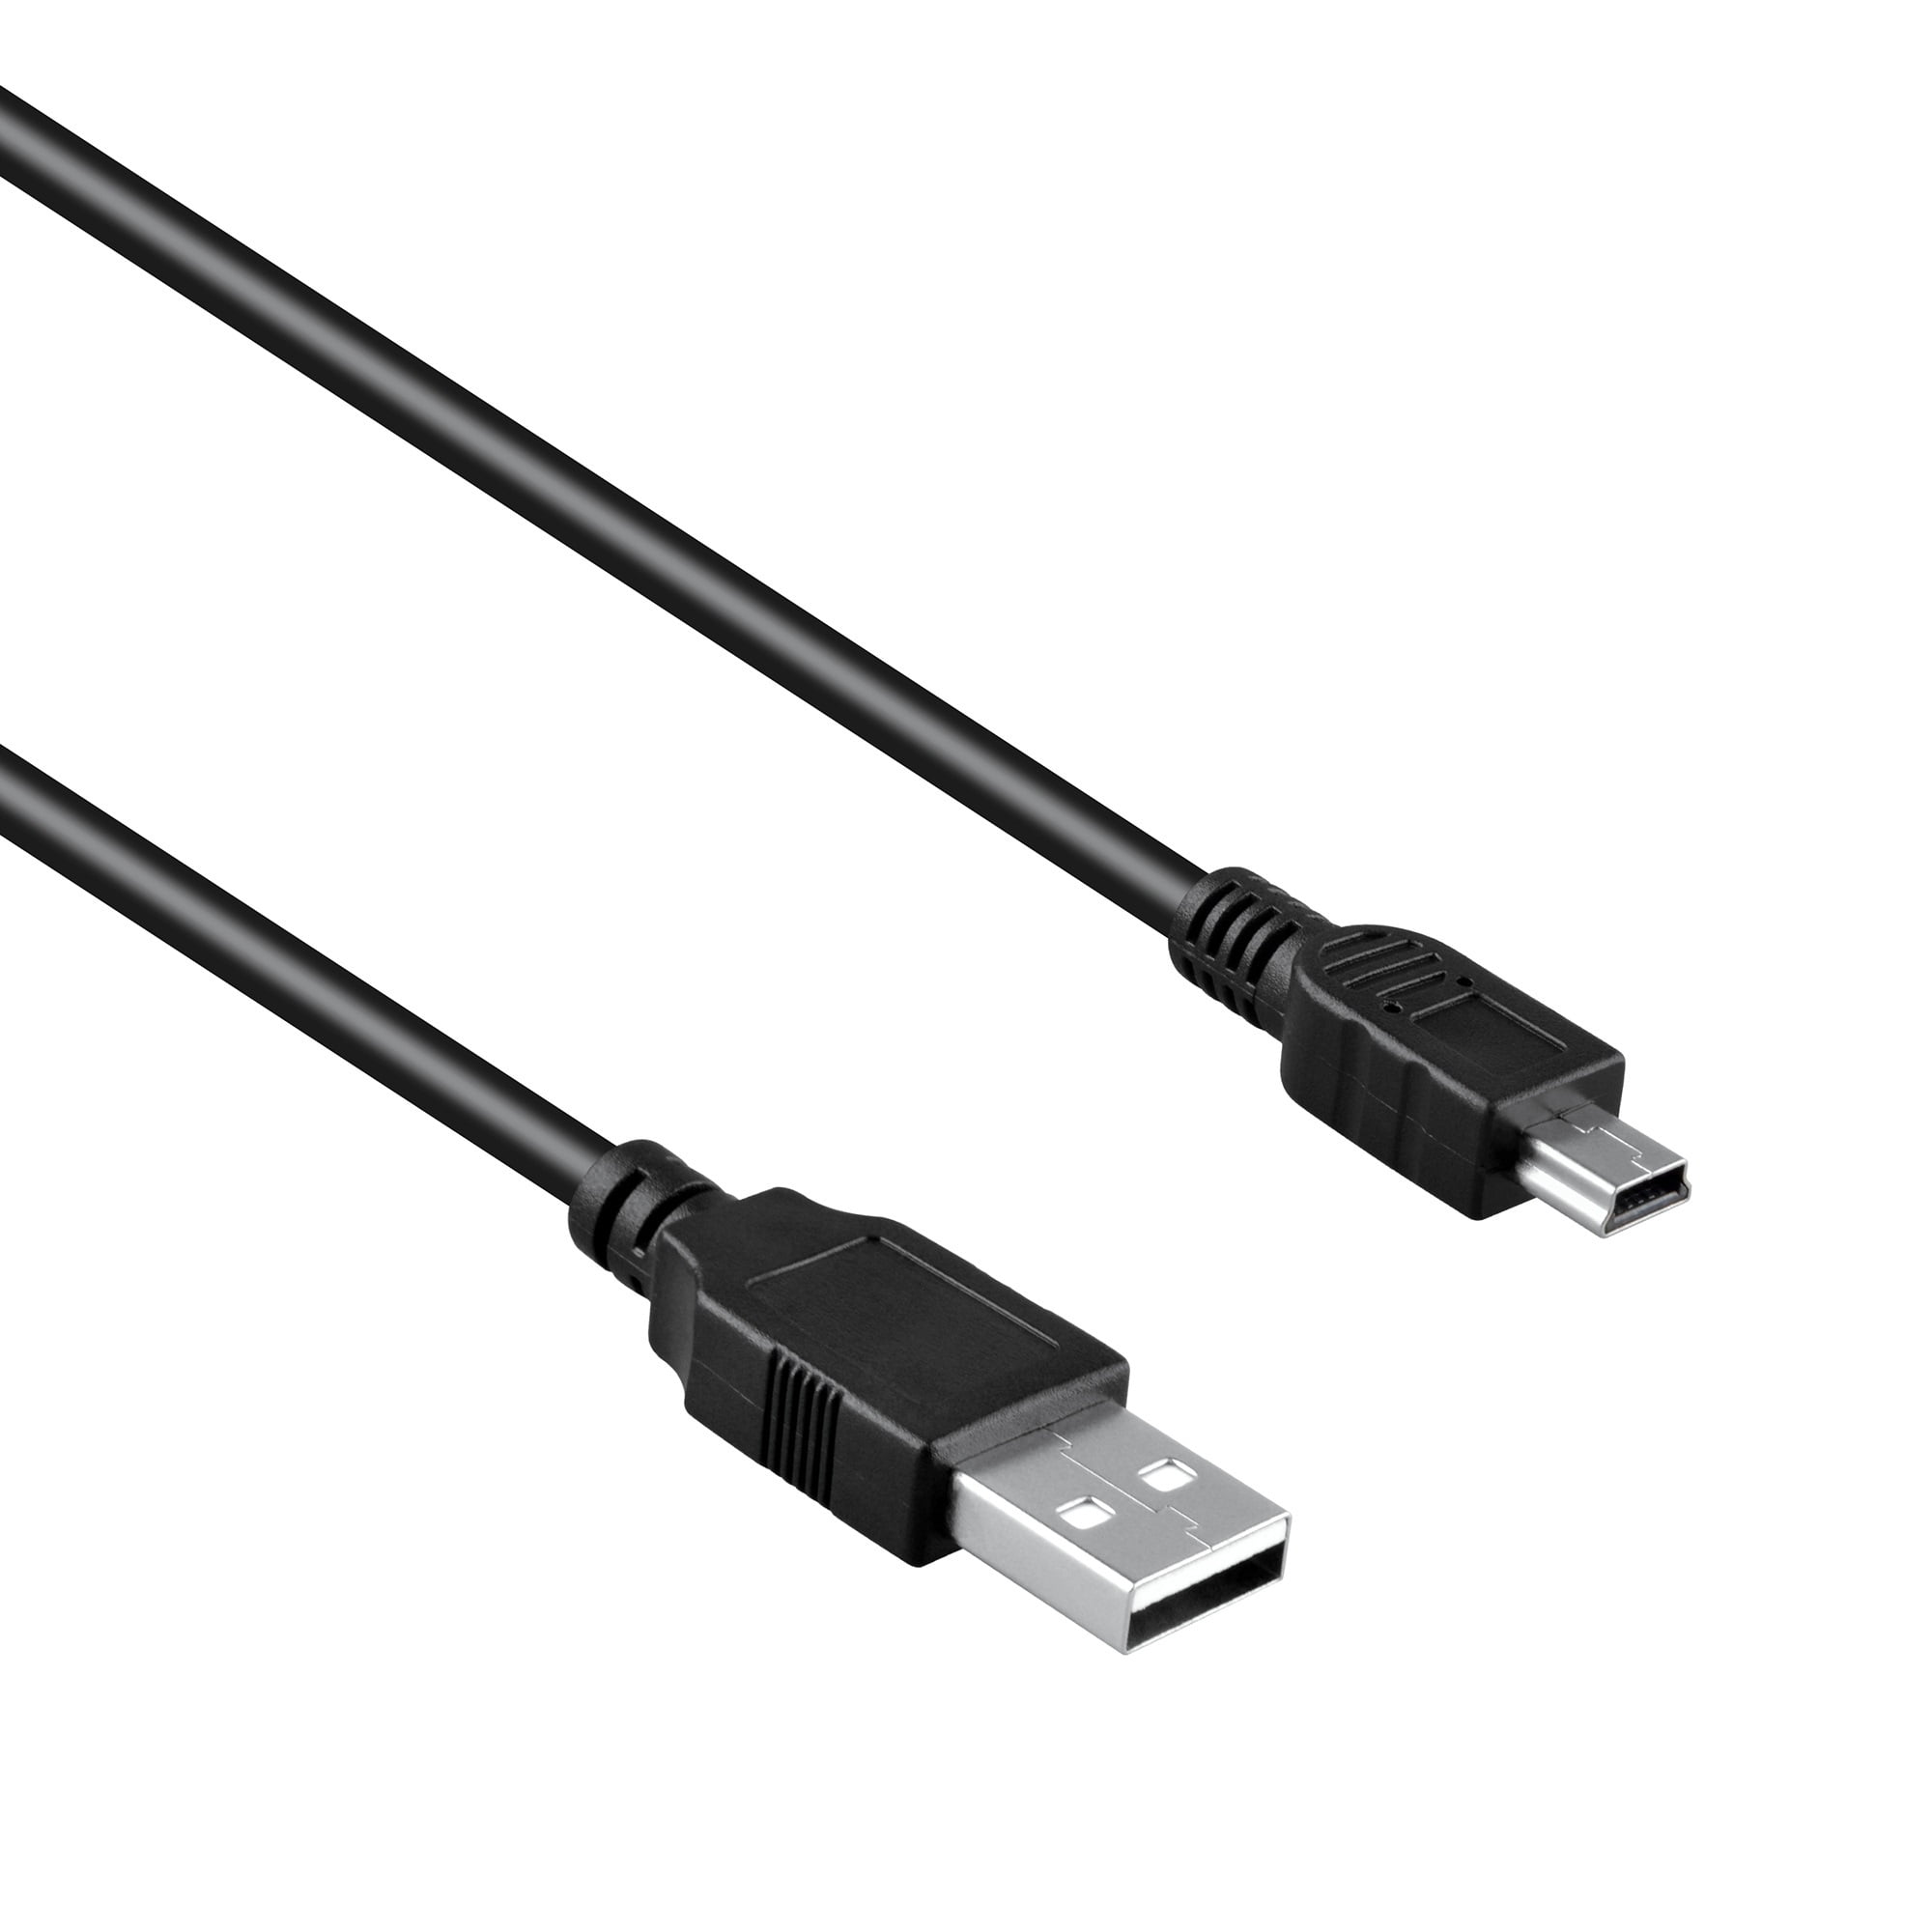 K-MAINS 5ft USB 2.0 Cable Replacement for Verbatim CLON 320GB 120GB 160GB 250GB External -